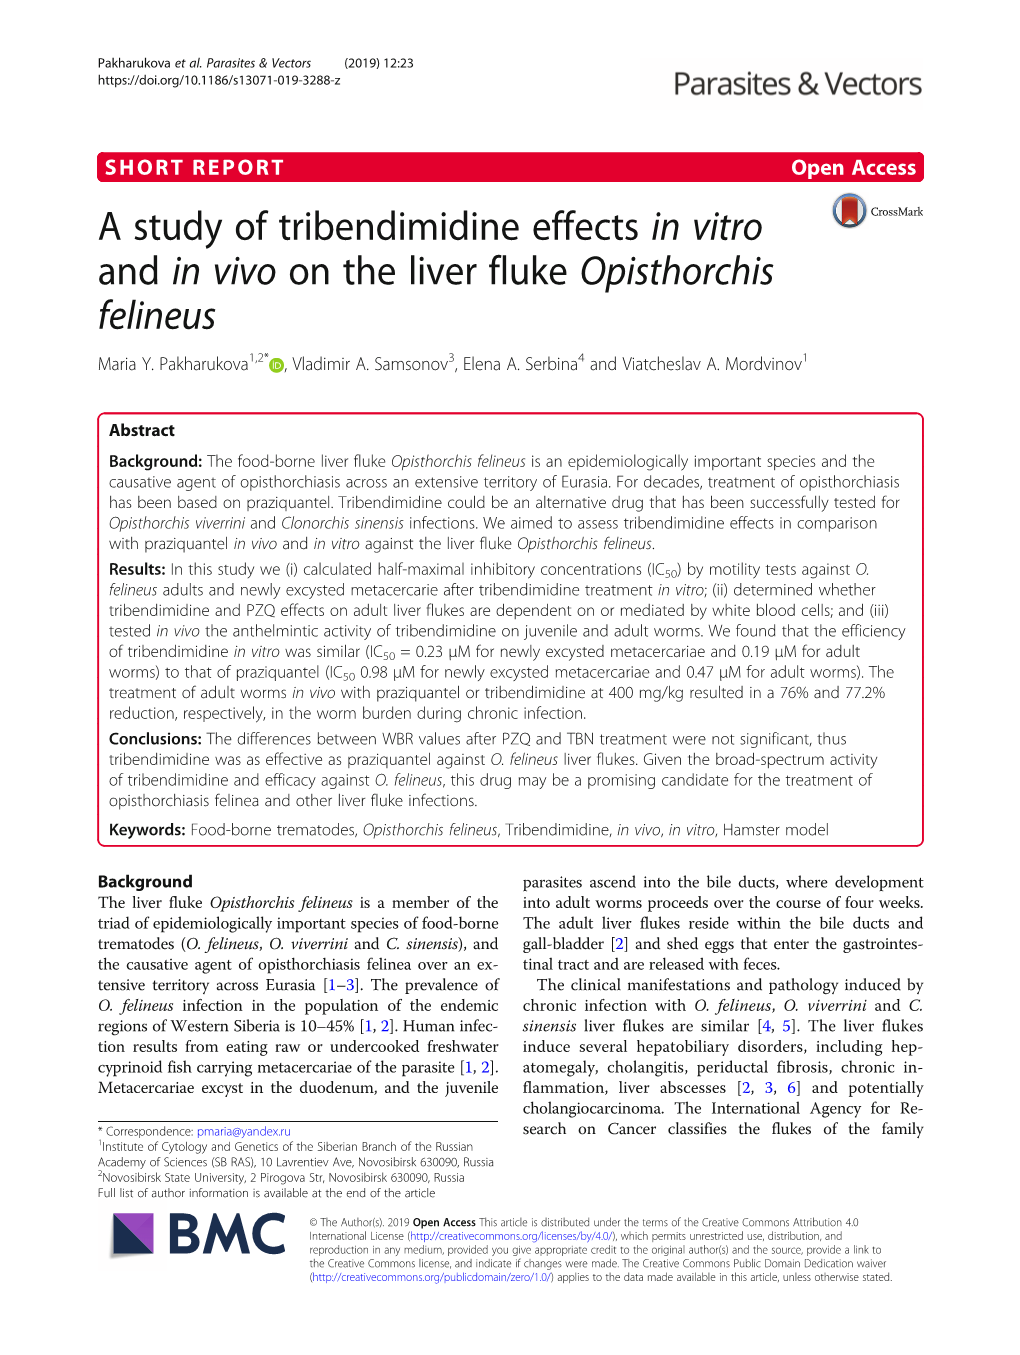 A Study of Tribendimidine Effects in Vitro and in Vivo on the Liver Fluke Opisthorchis Felineus